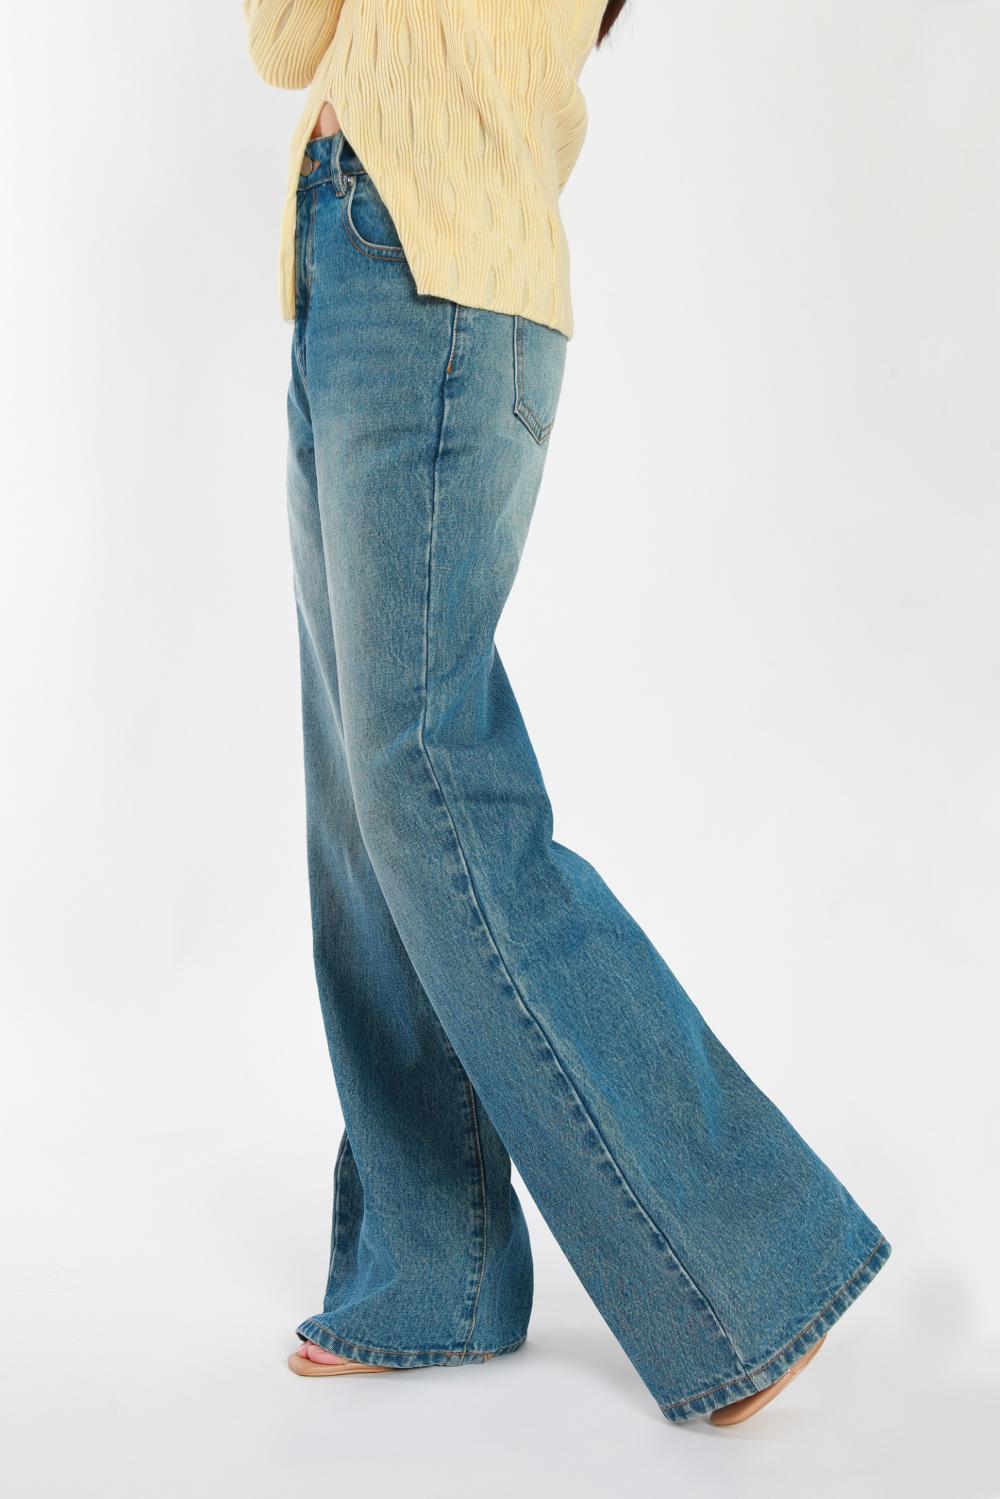 Jeans de perna larga azul claro